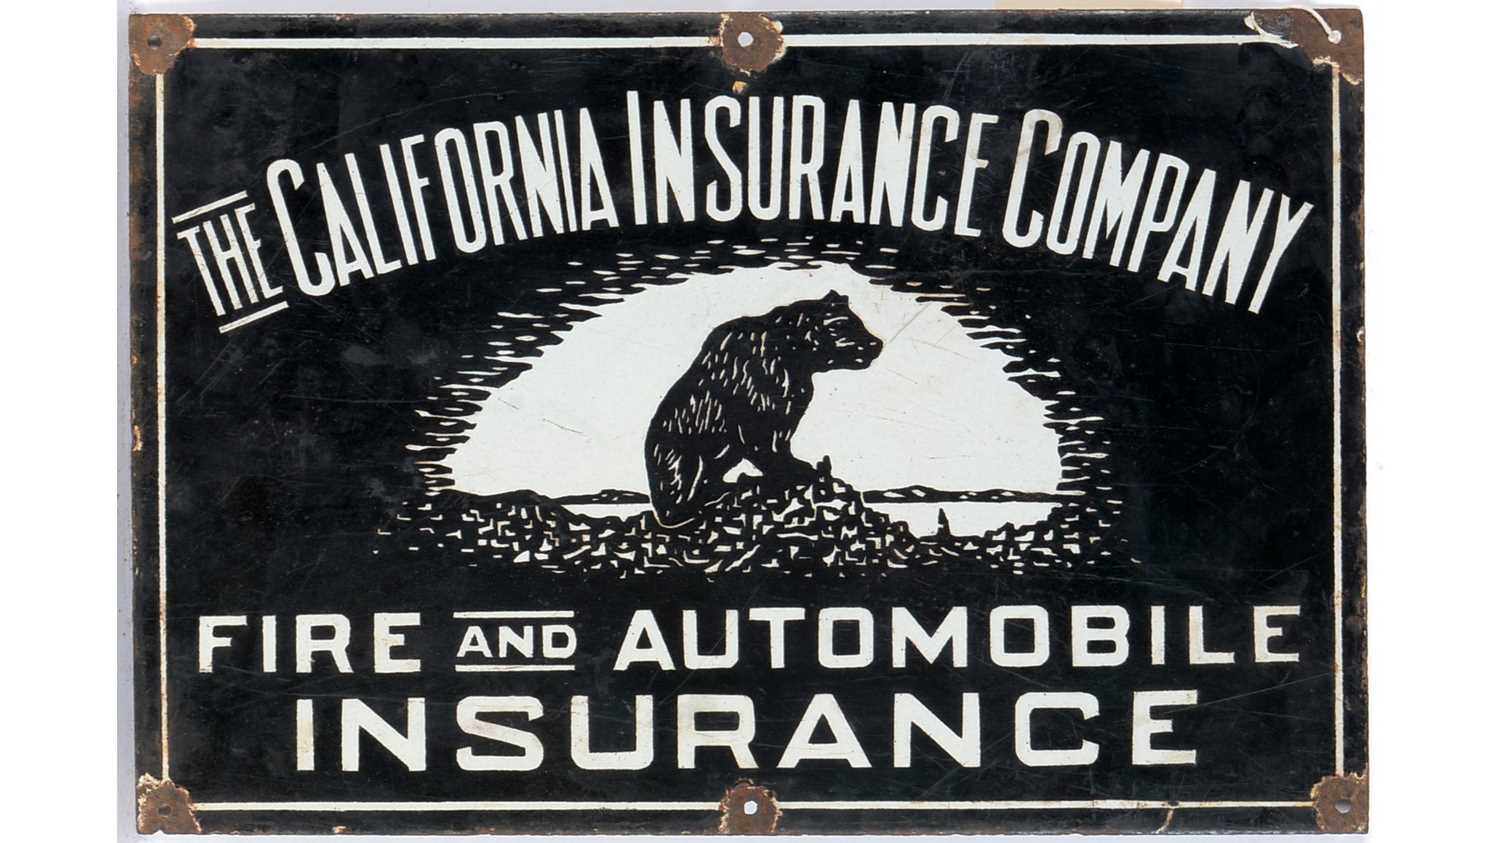 The California Insurance Company enamel advertising sign,